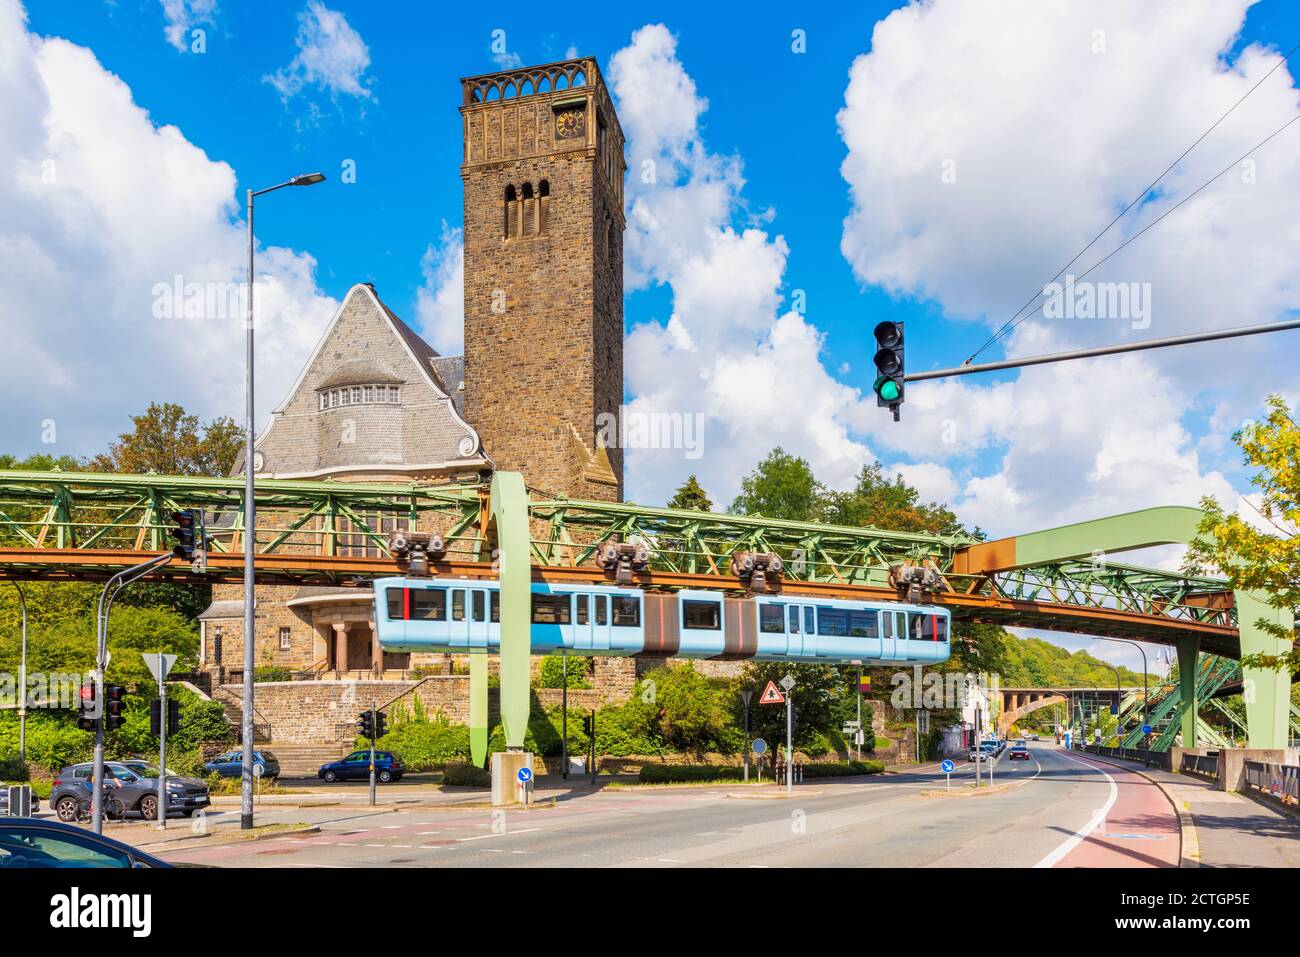 Treno Schwebebahn passando per una chiesa a Wuppertal Germania Foto Stock